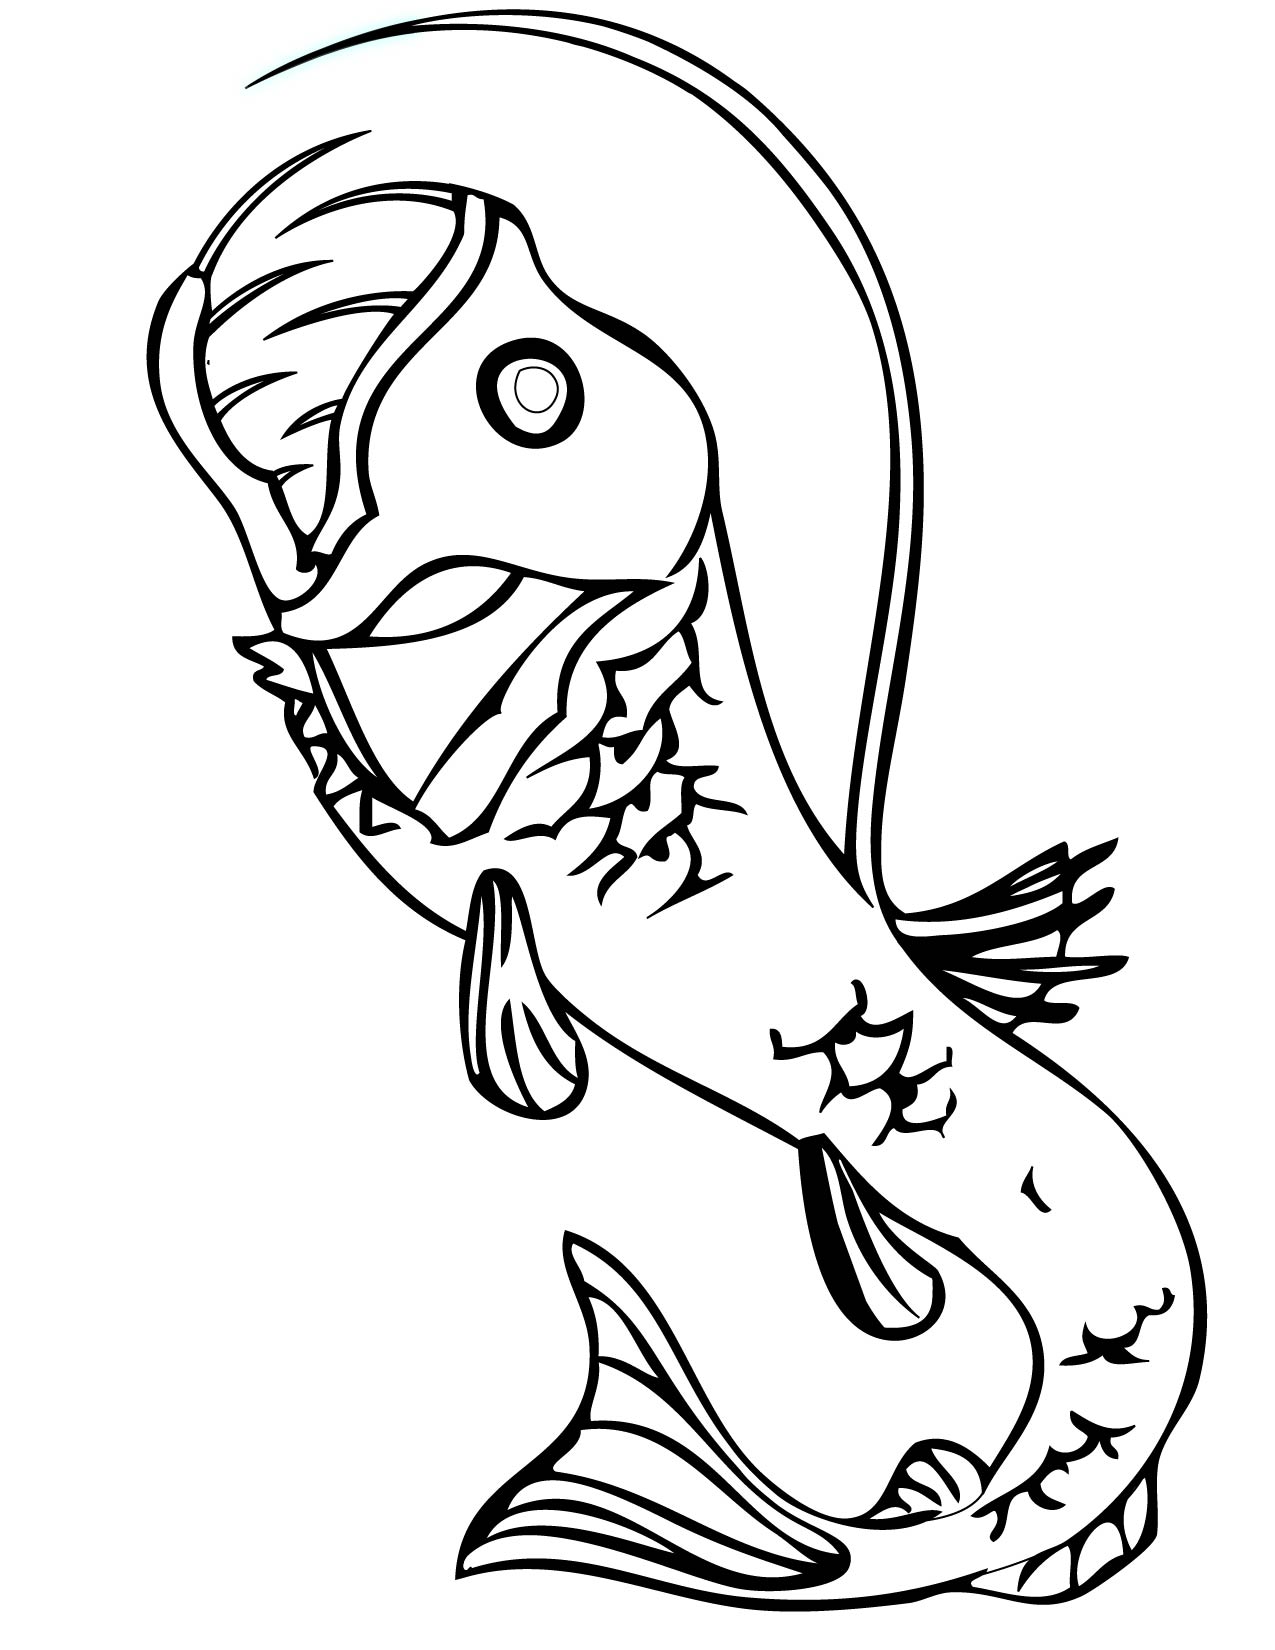 Viperfish clipart #8, Download drawings